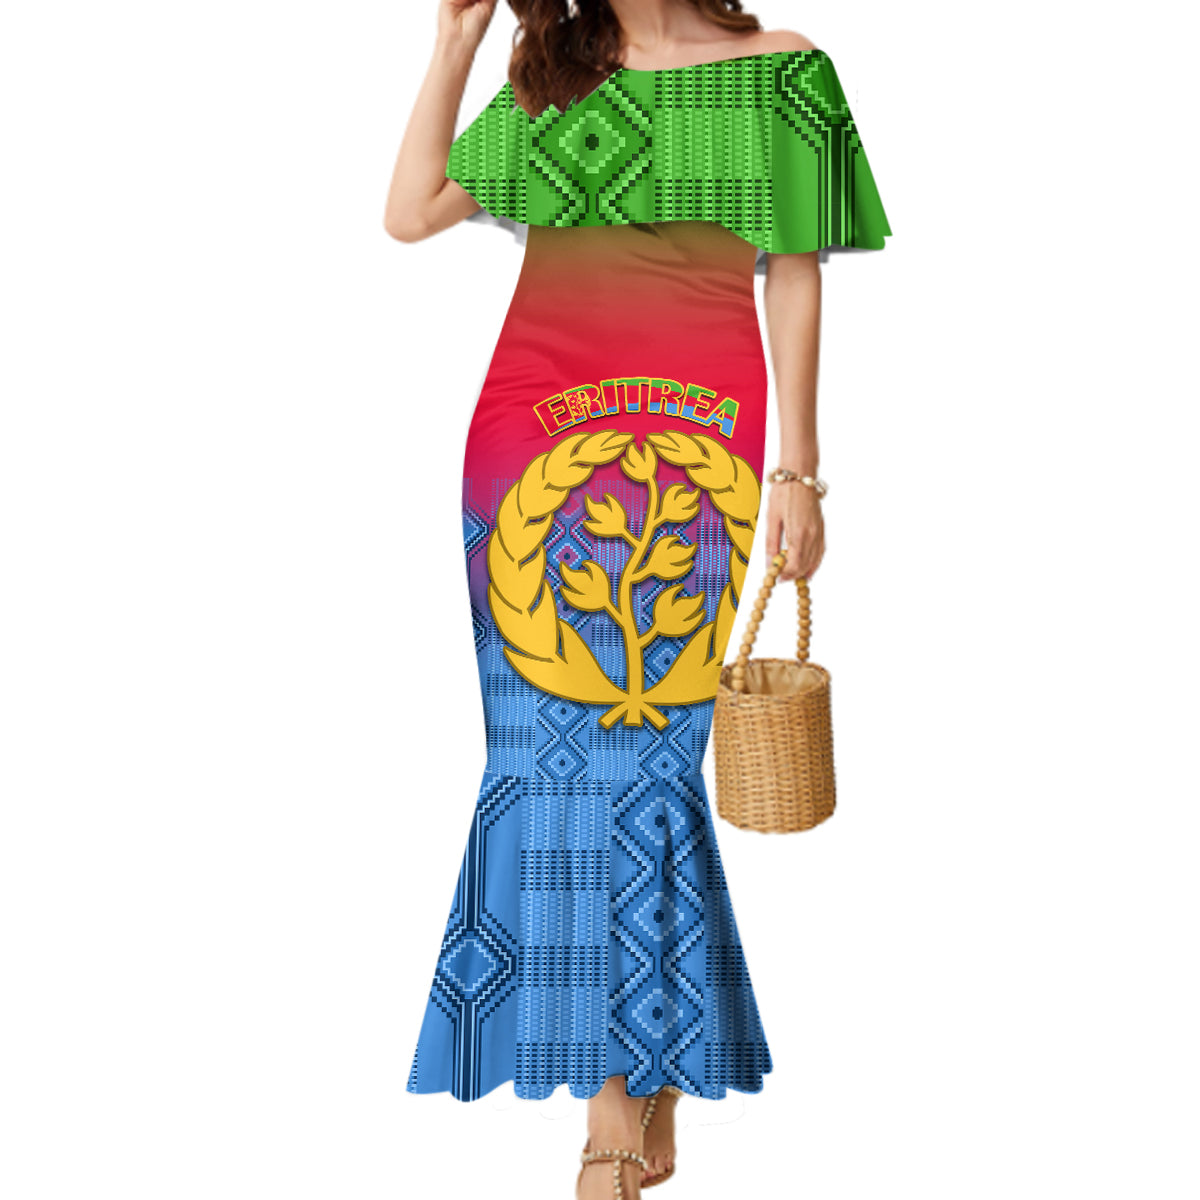 eritrea-revolution-day-mermaid-dress-eritean-kente-pattern-gradient-style